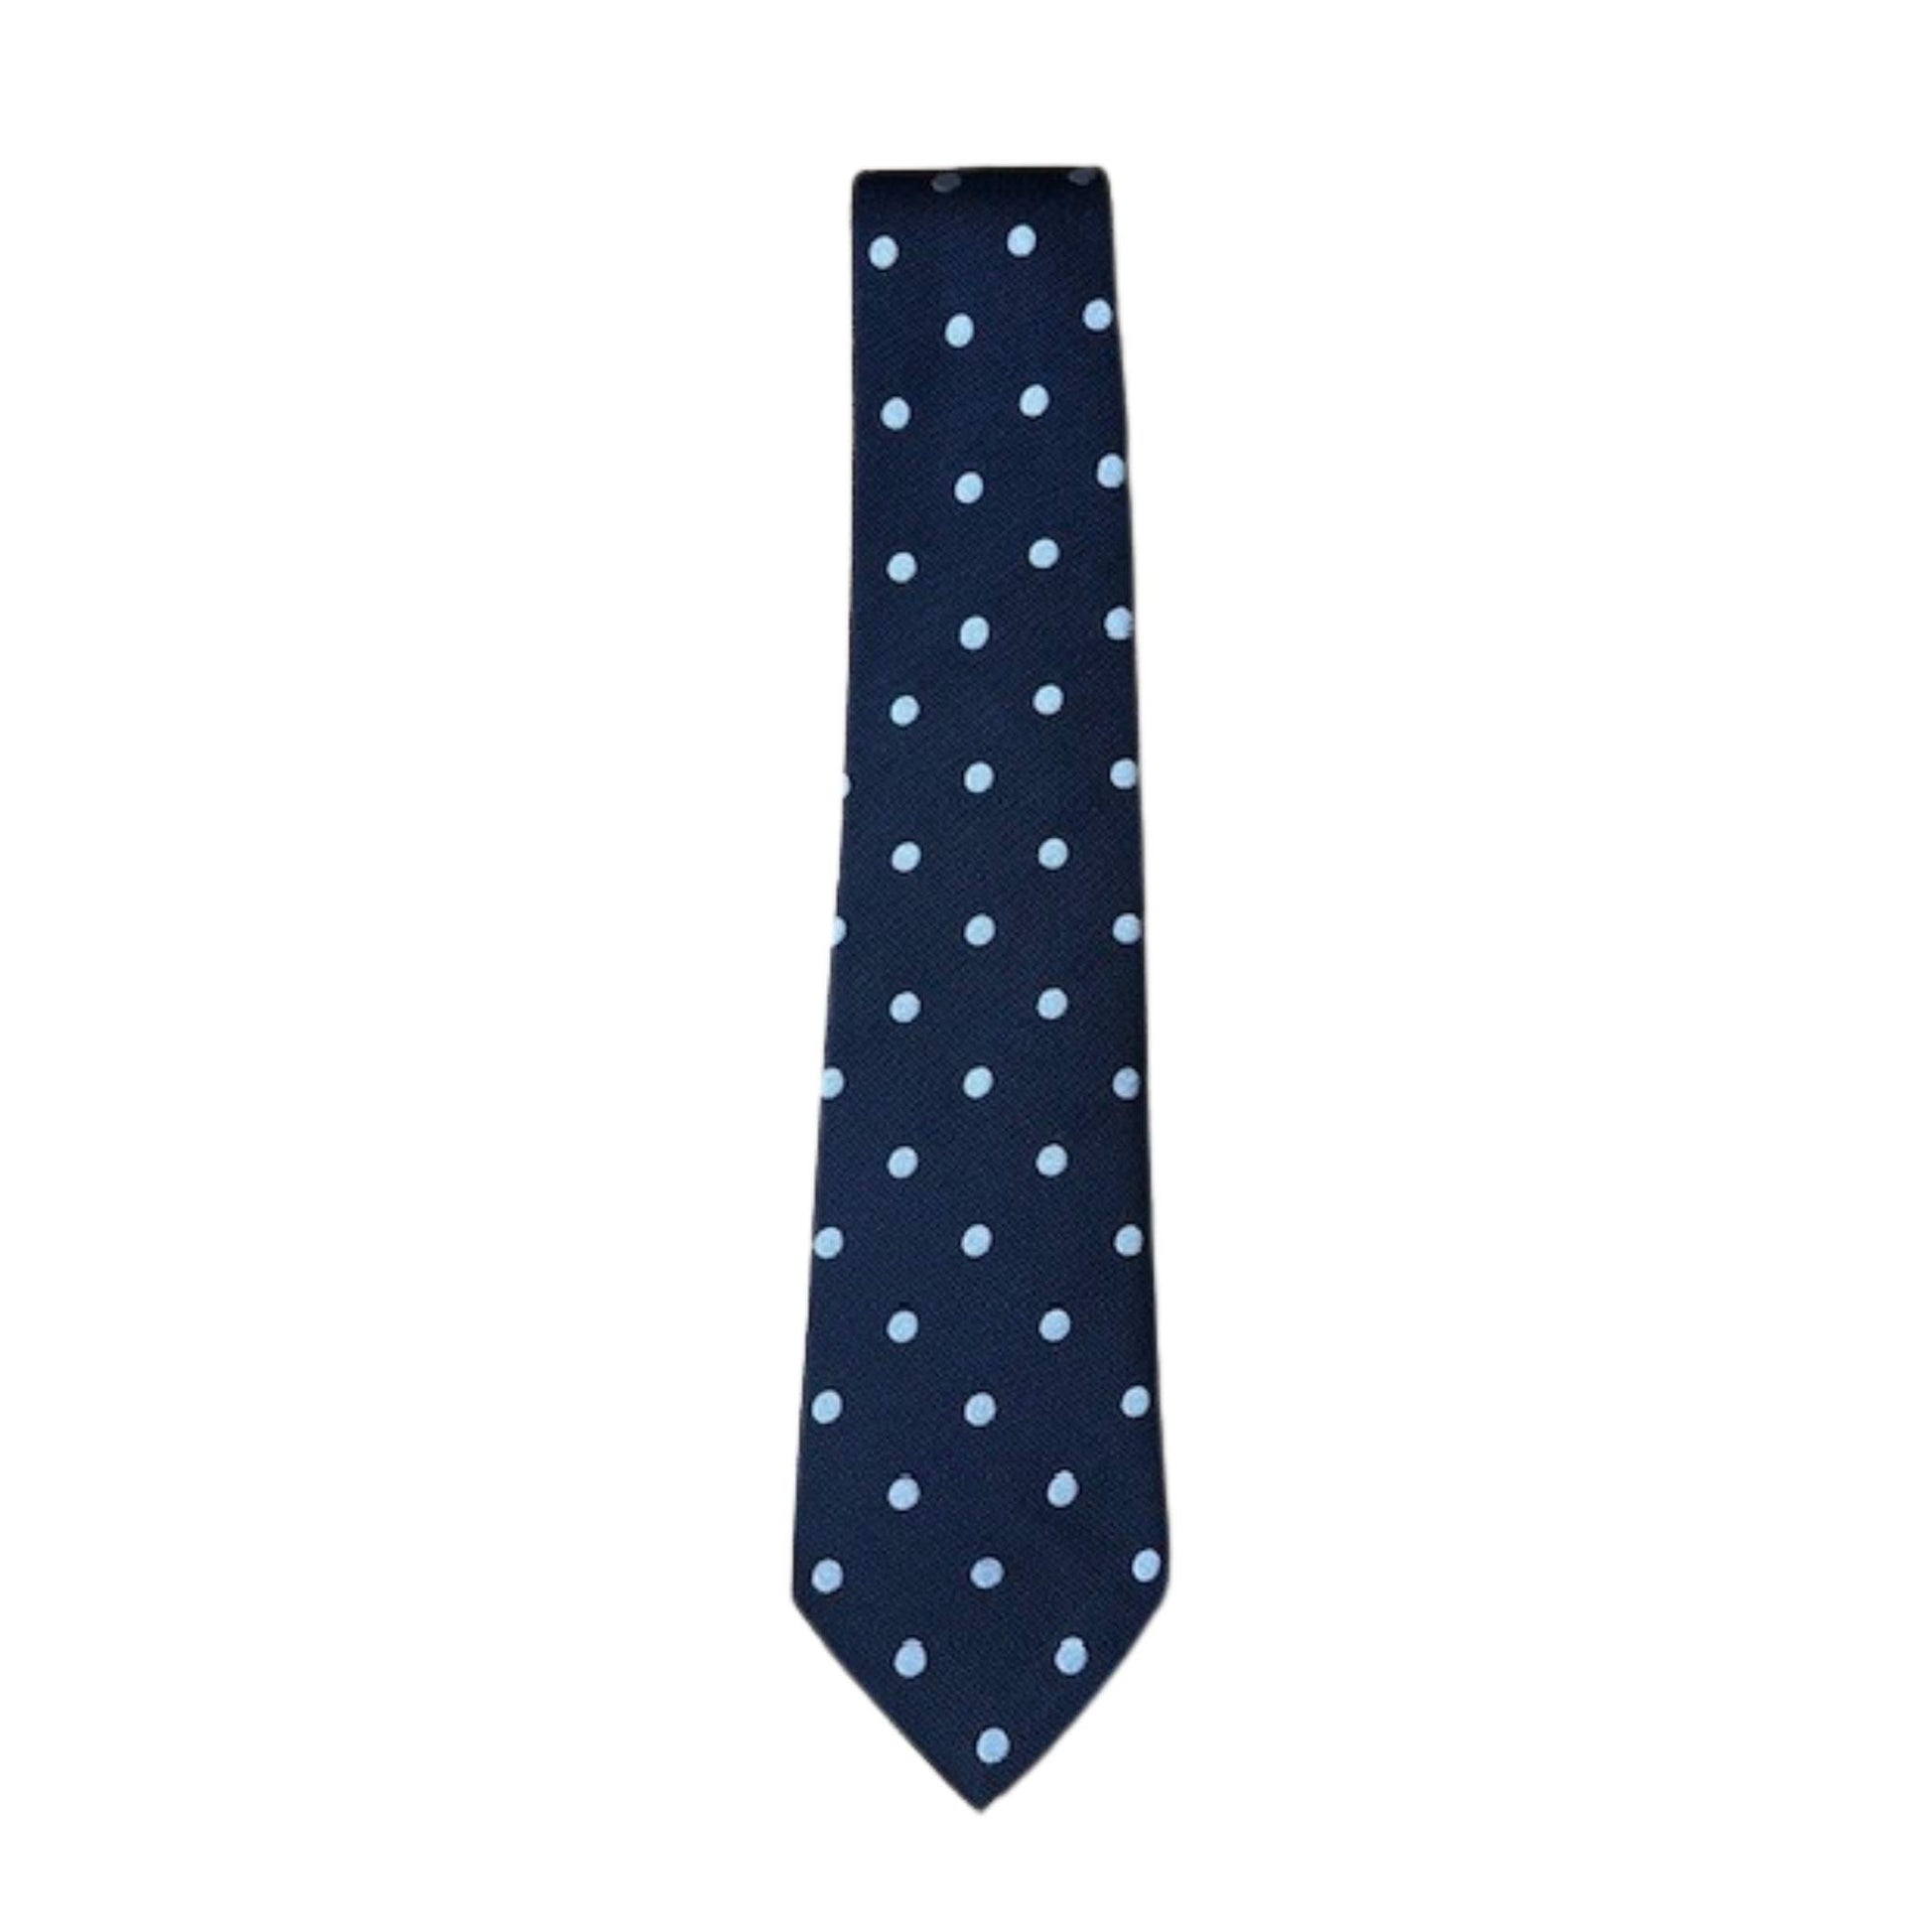 Rhodes Wood  Navy and light Blue spot tie